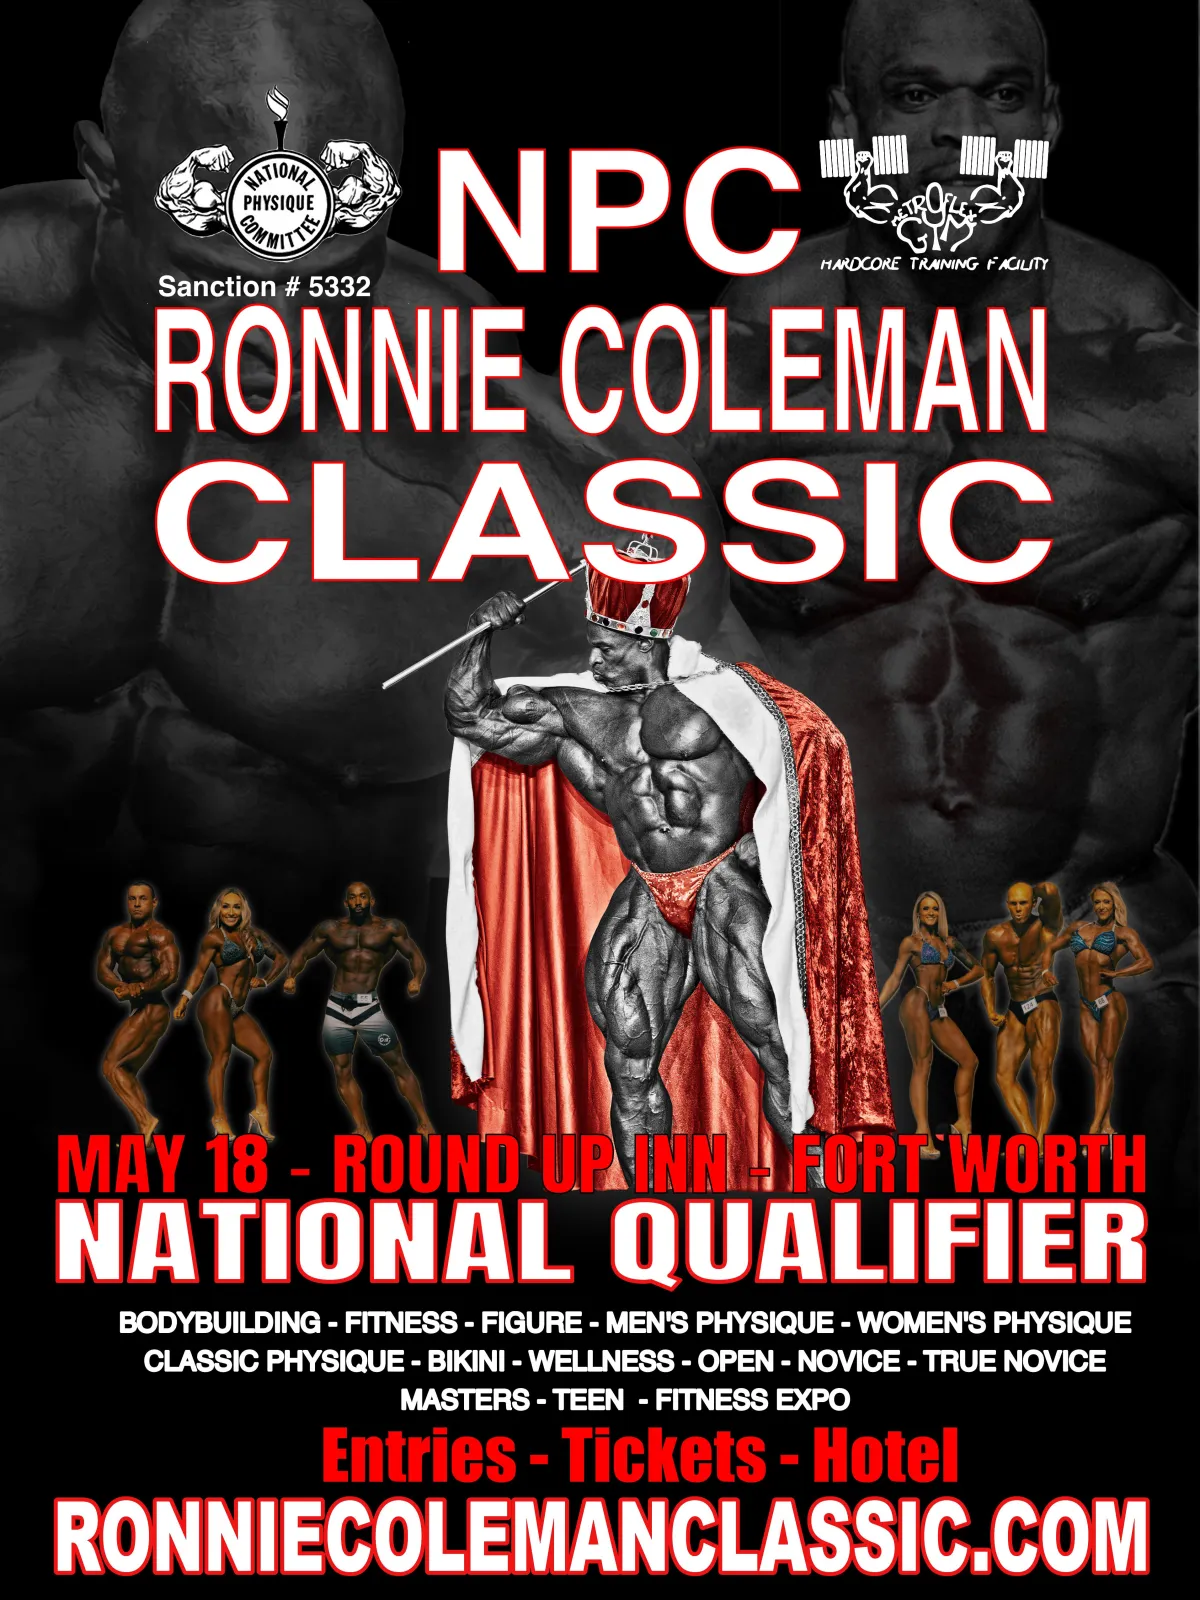 NPC Better Bodies Classic - April 6 - Round Up Inn